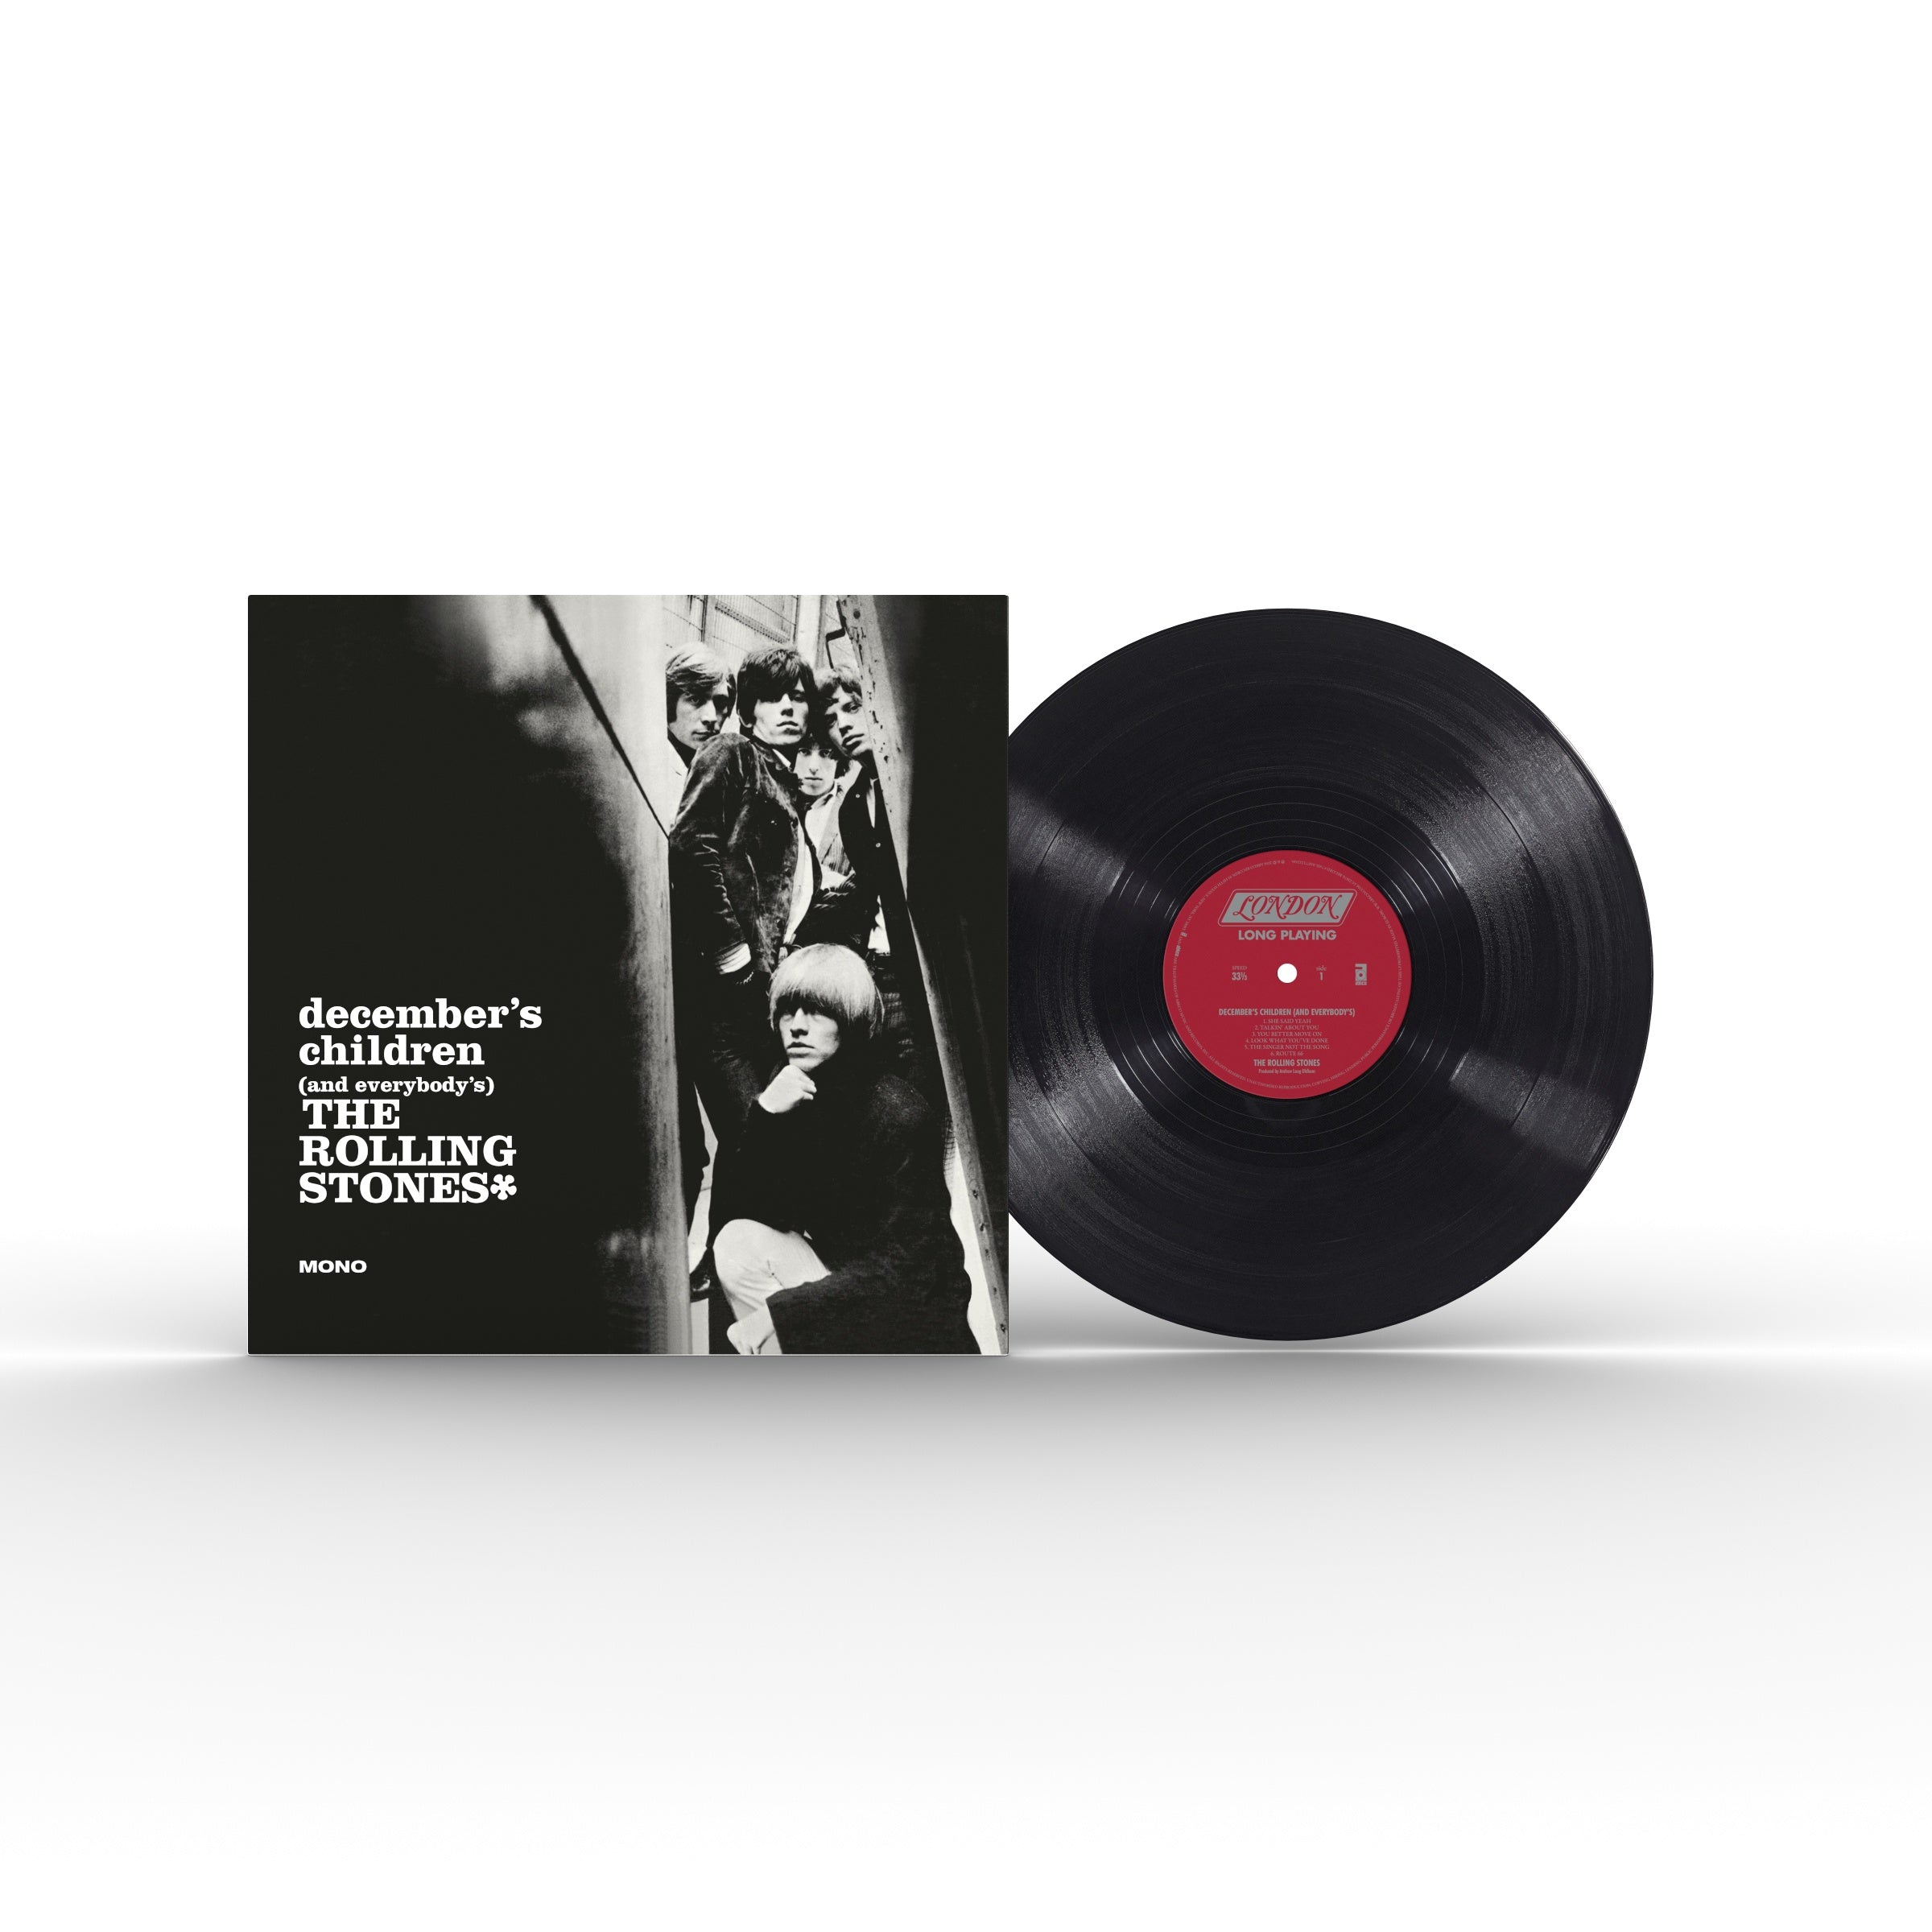 The Rolling Stones - December's Children (And Everybody's): Vinyl LP